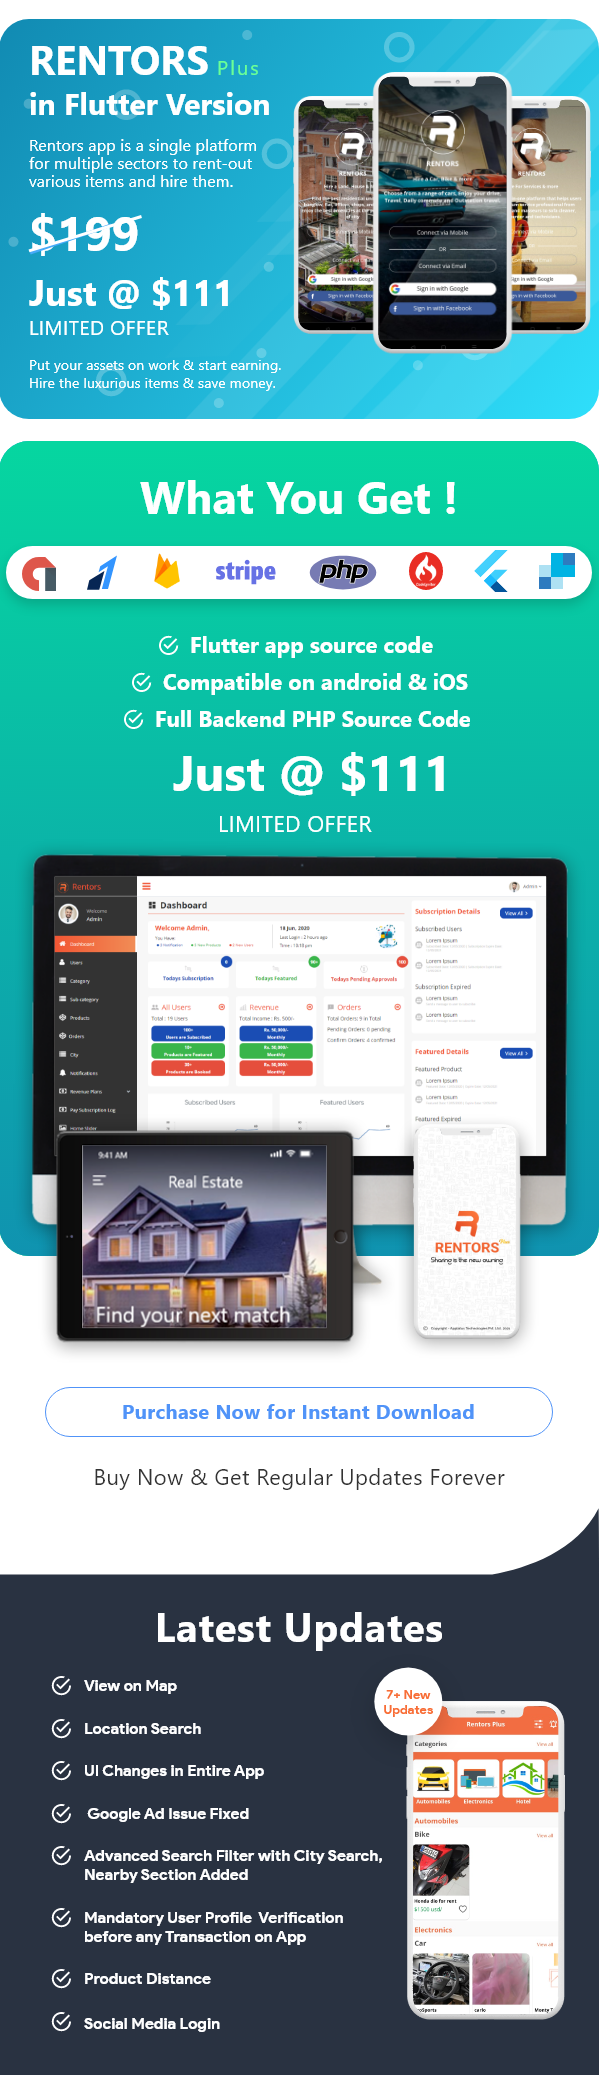 Rentors Plus- Universal Flutter App For Renting and Hiring - 2